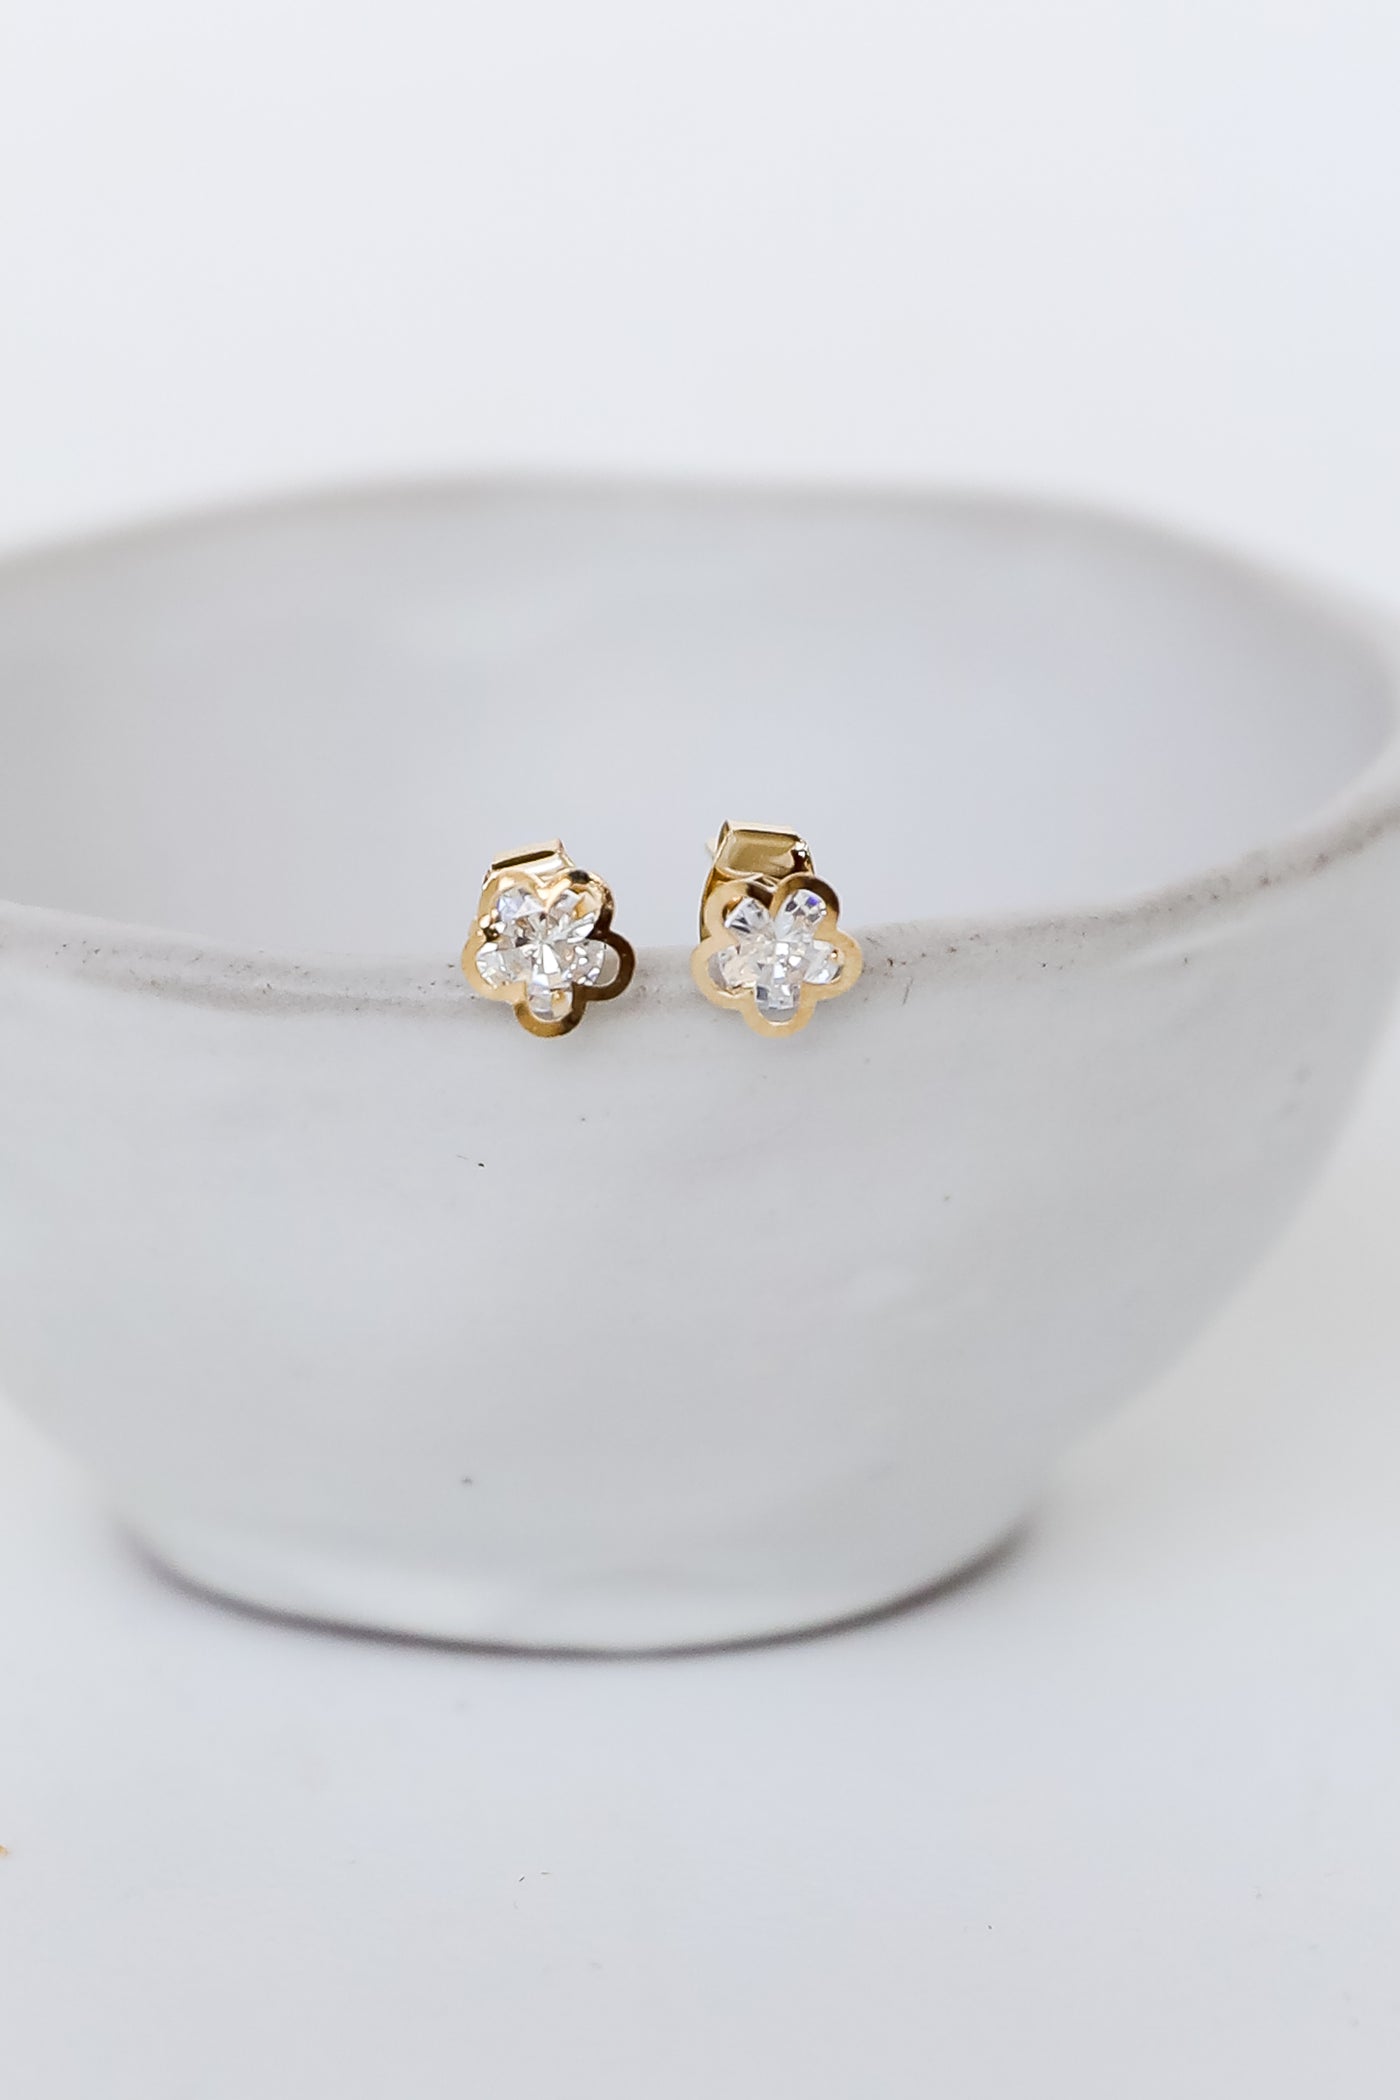 Gold Rhinestone Flower Stud Earrings close up